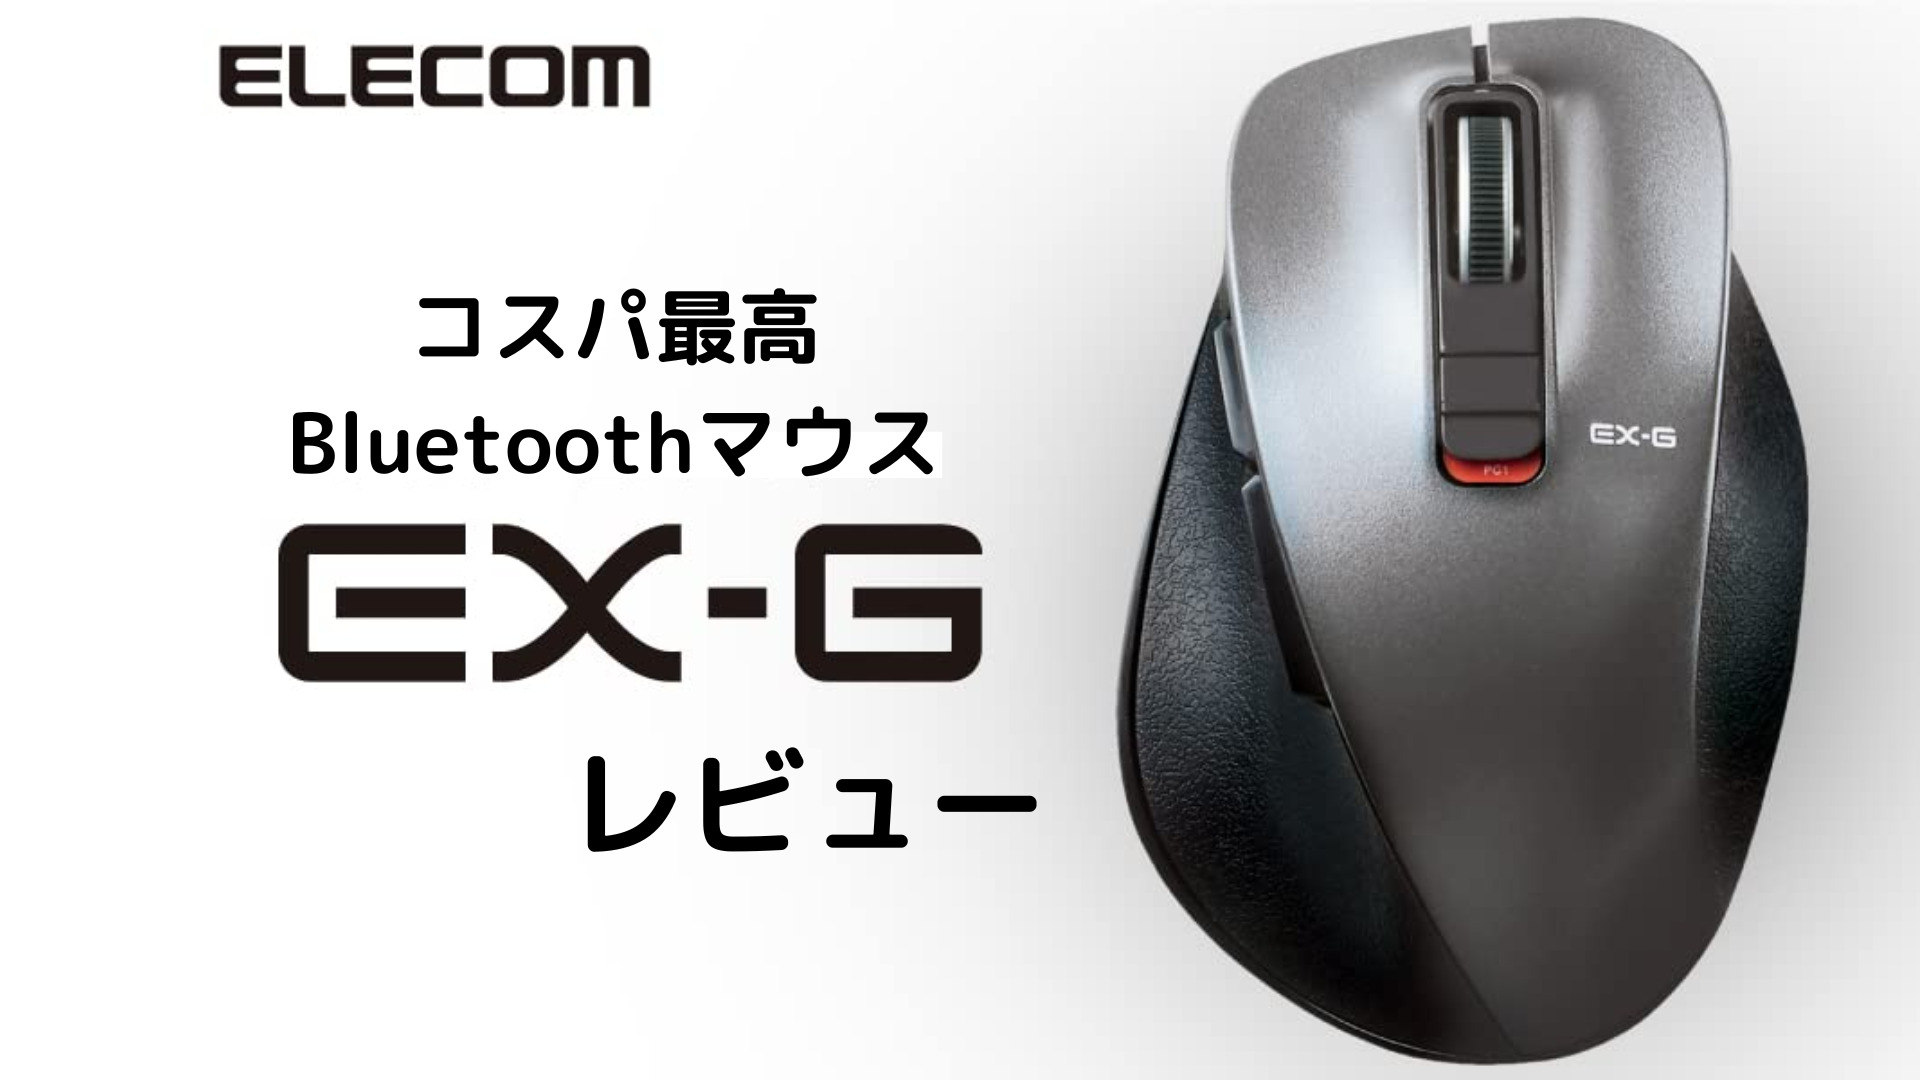 EX-G Elecom Bluetoothマウス レビュー